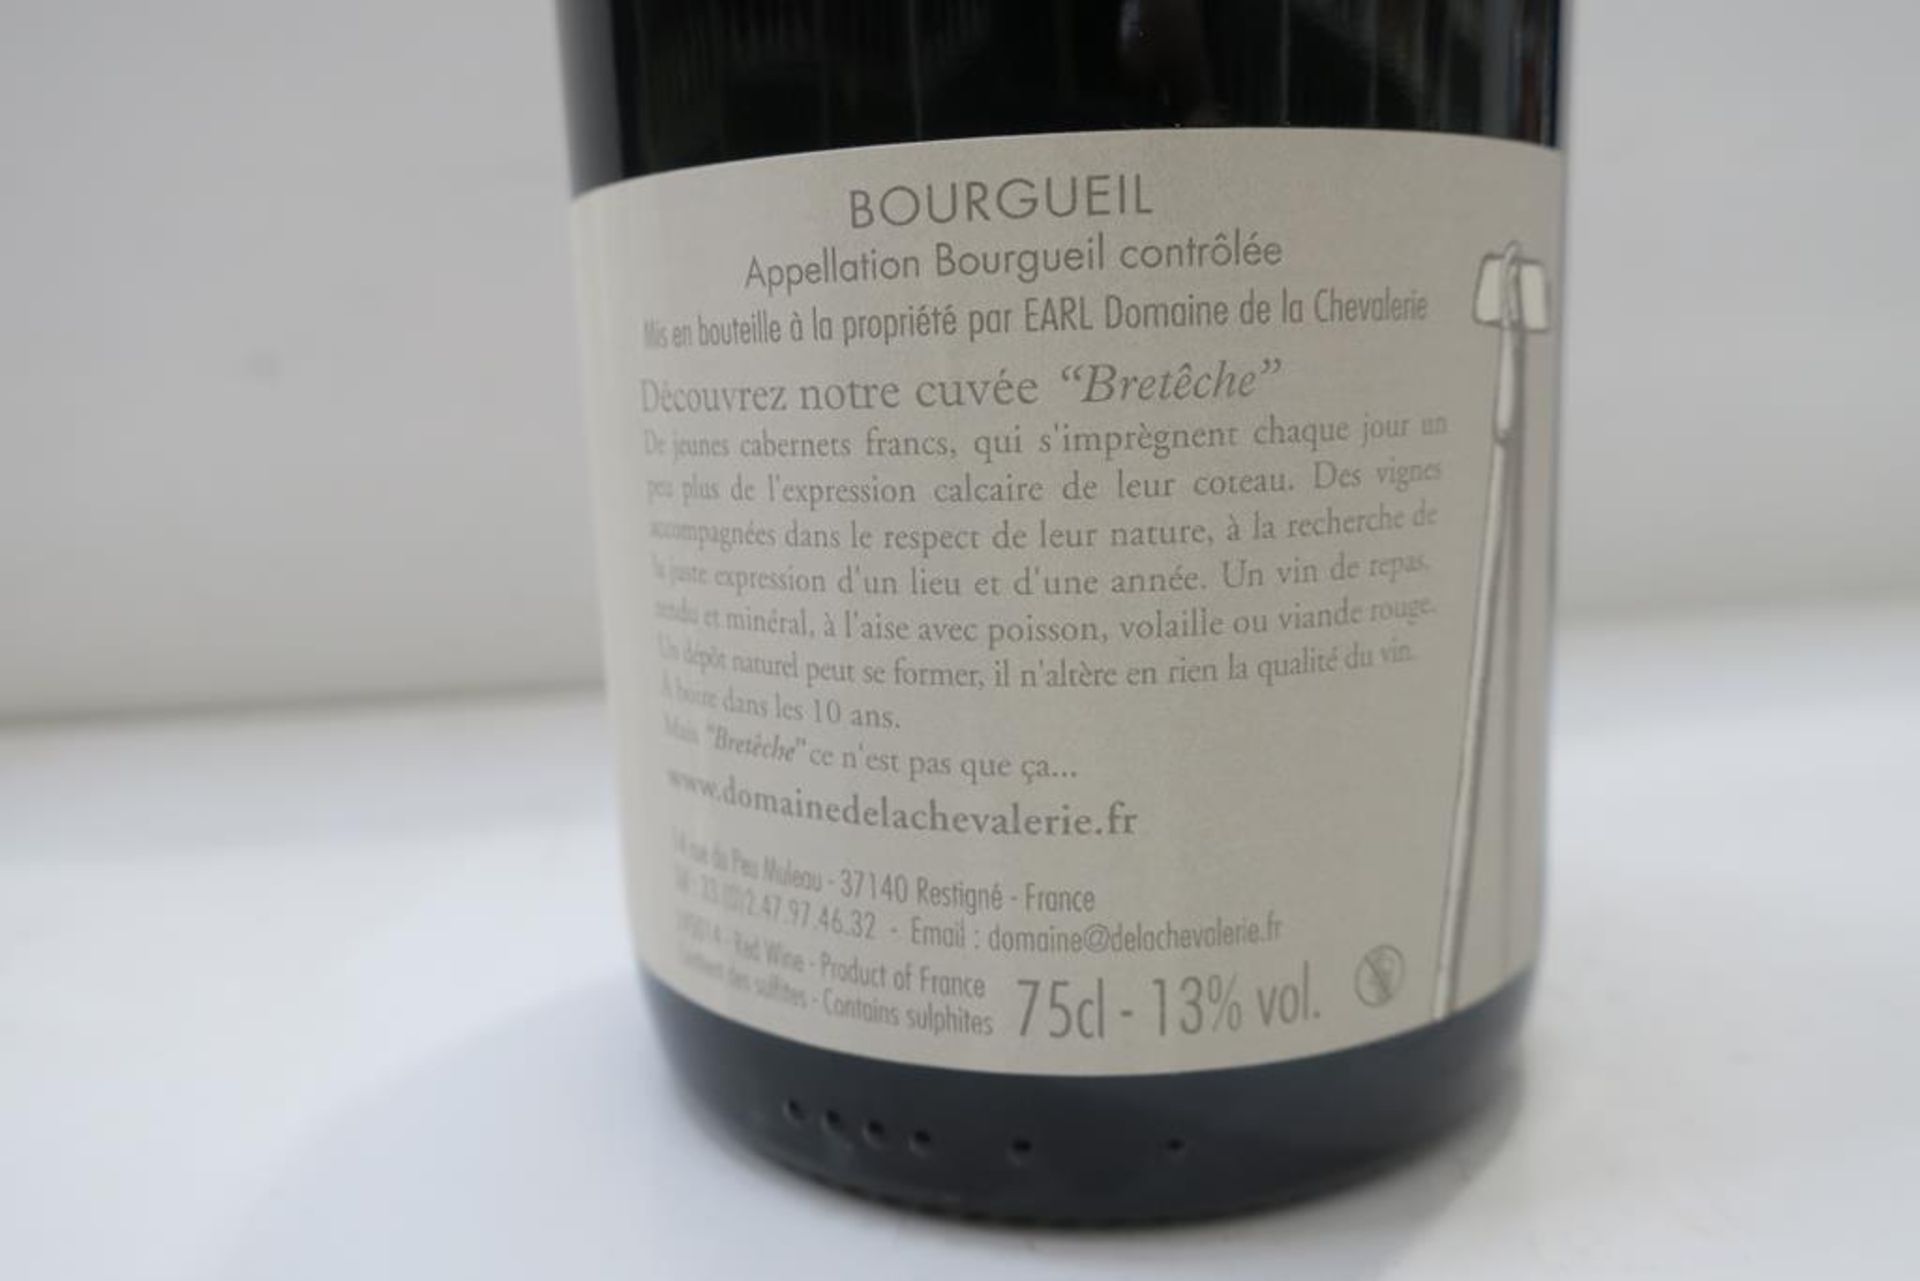 12 x Bottles of Domaine de la Chevalerie 'Bourgueil Breteche' 2014 Red Wine - Image 2 of 2